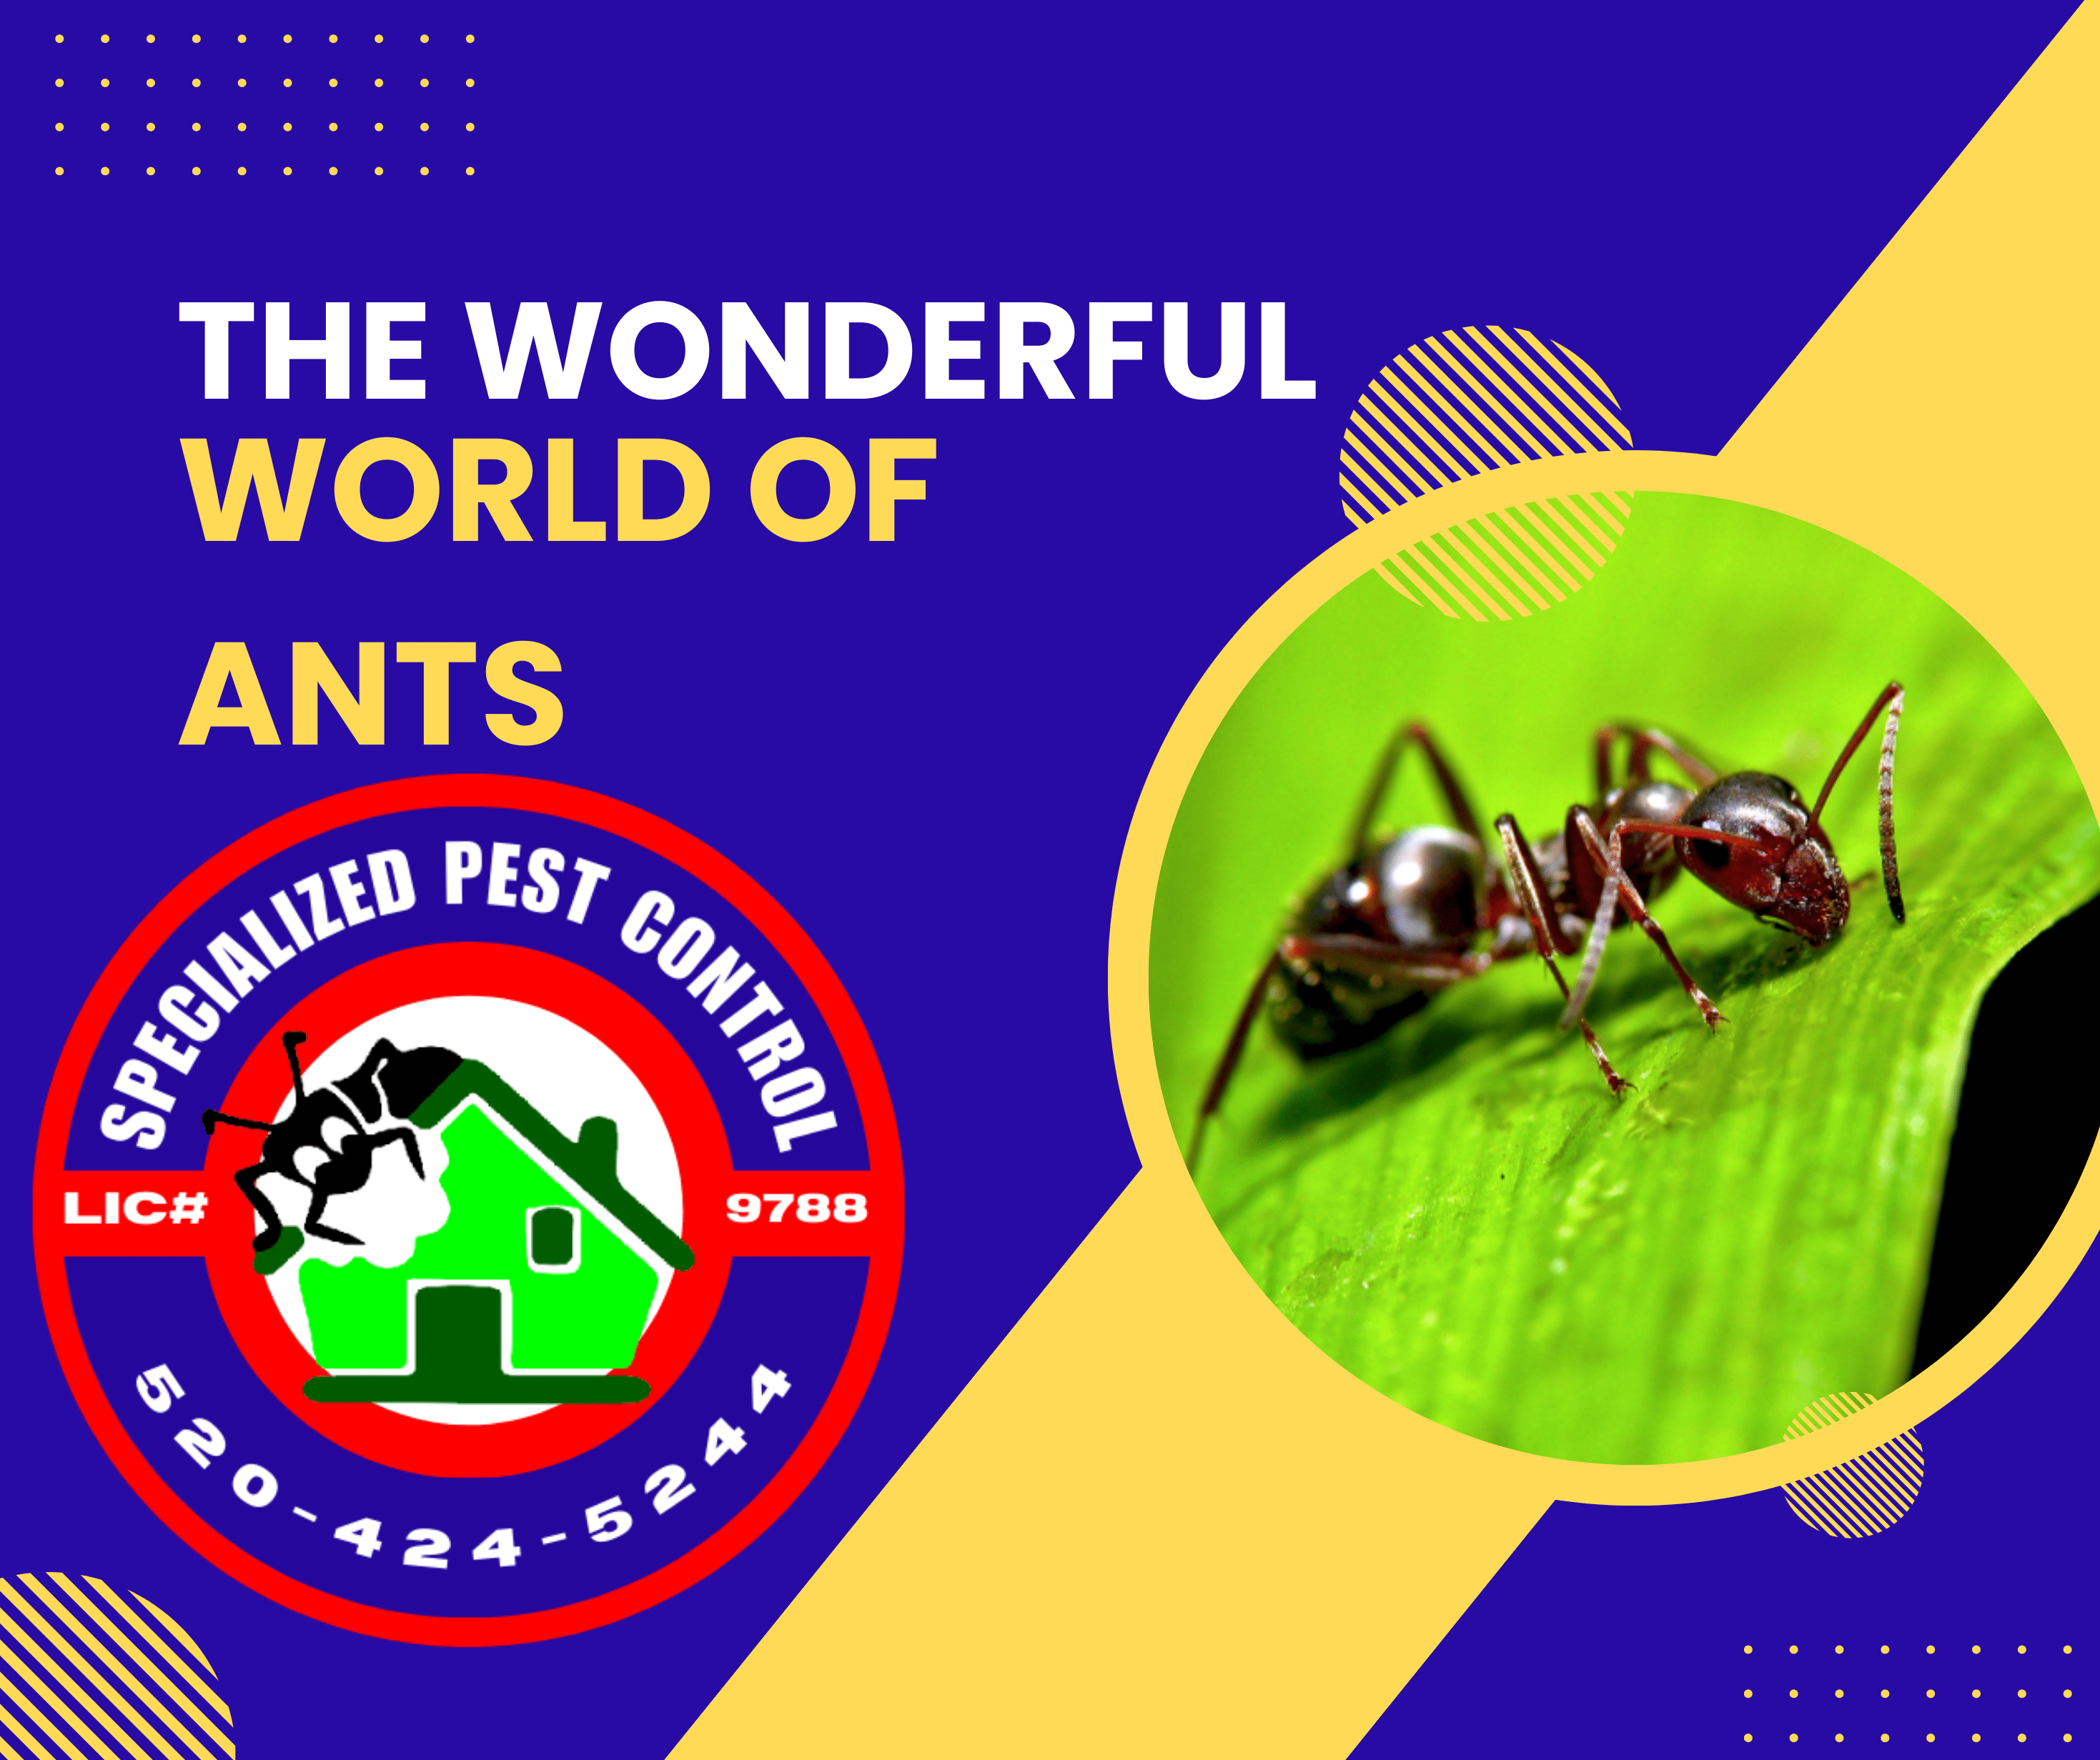 THE WONDERFUL WORLD OF ANTS PEST CONTROL